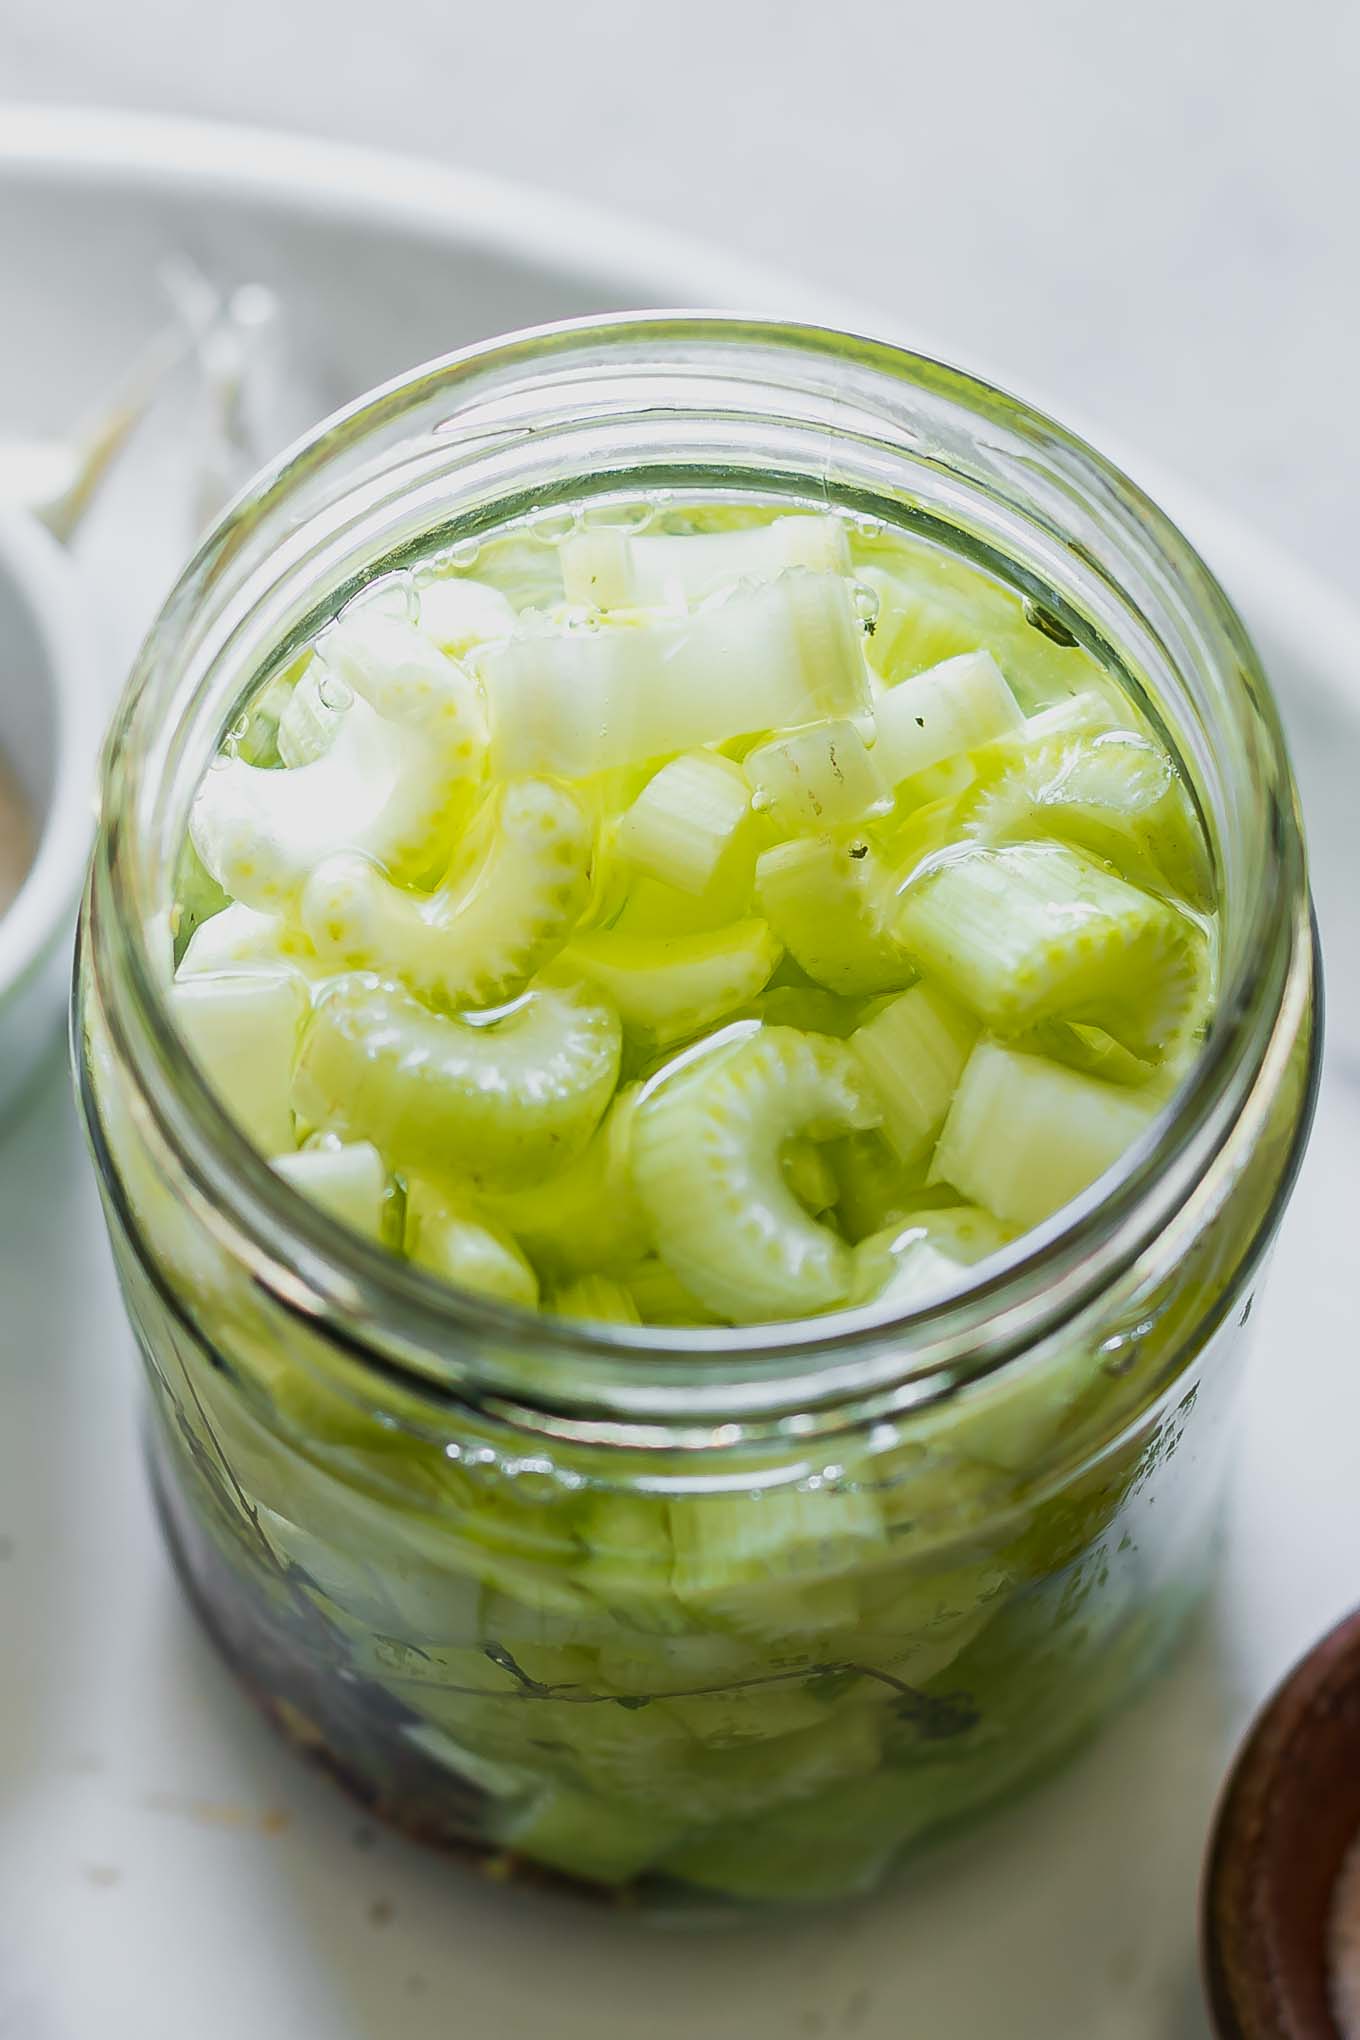 celery slices in a jar with pickling brine